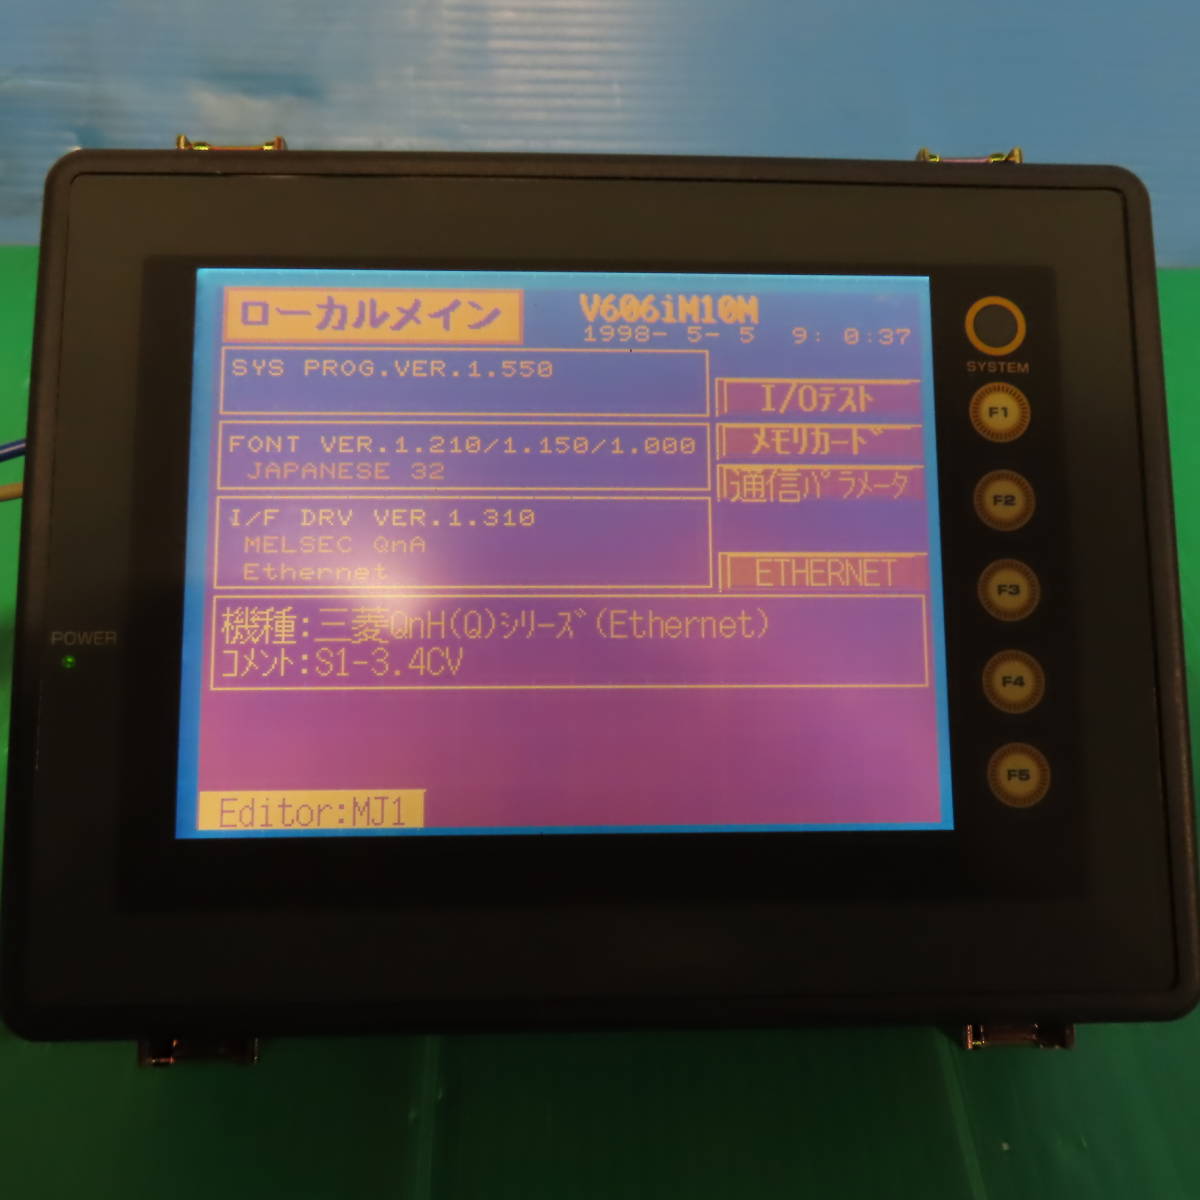 Fuji 富士電機 タッチパネル モニタッチ プログラマブル表示器V6シリーズ 5.7型 320×240 24V Ⅴ606iM10M 通電確認済み（17）の画像2